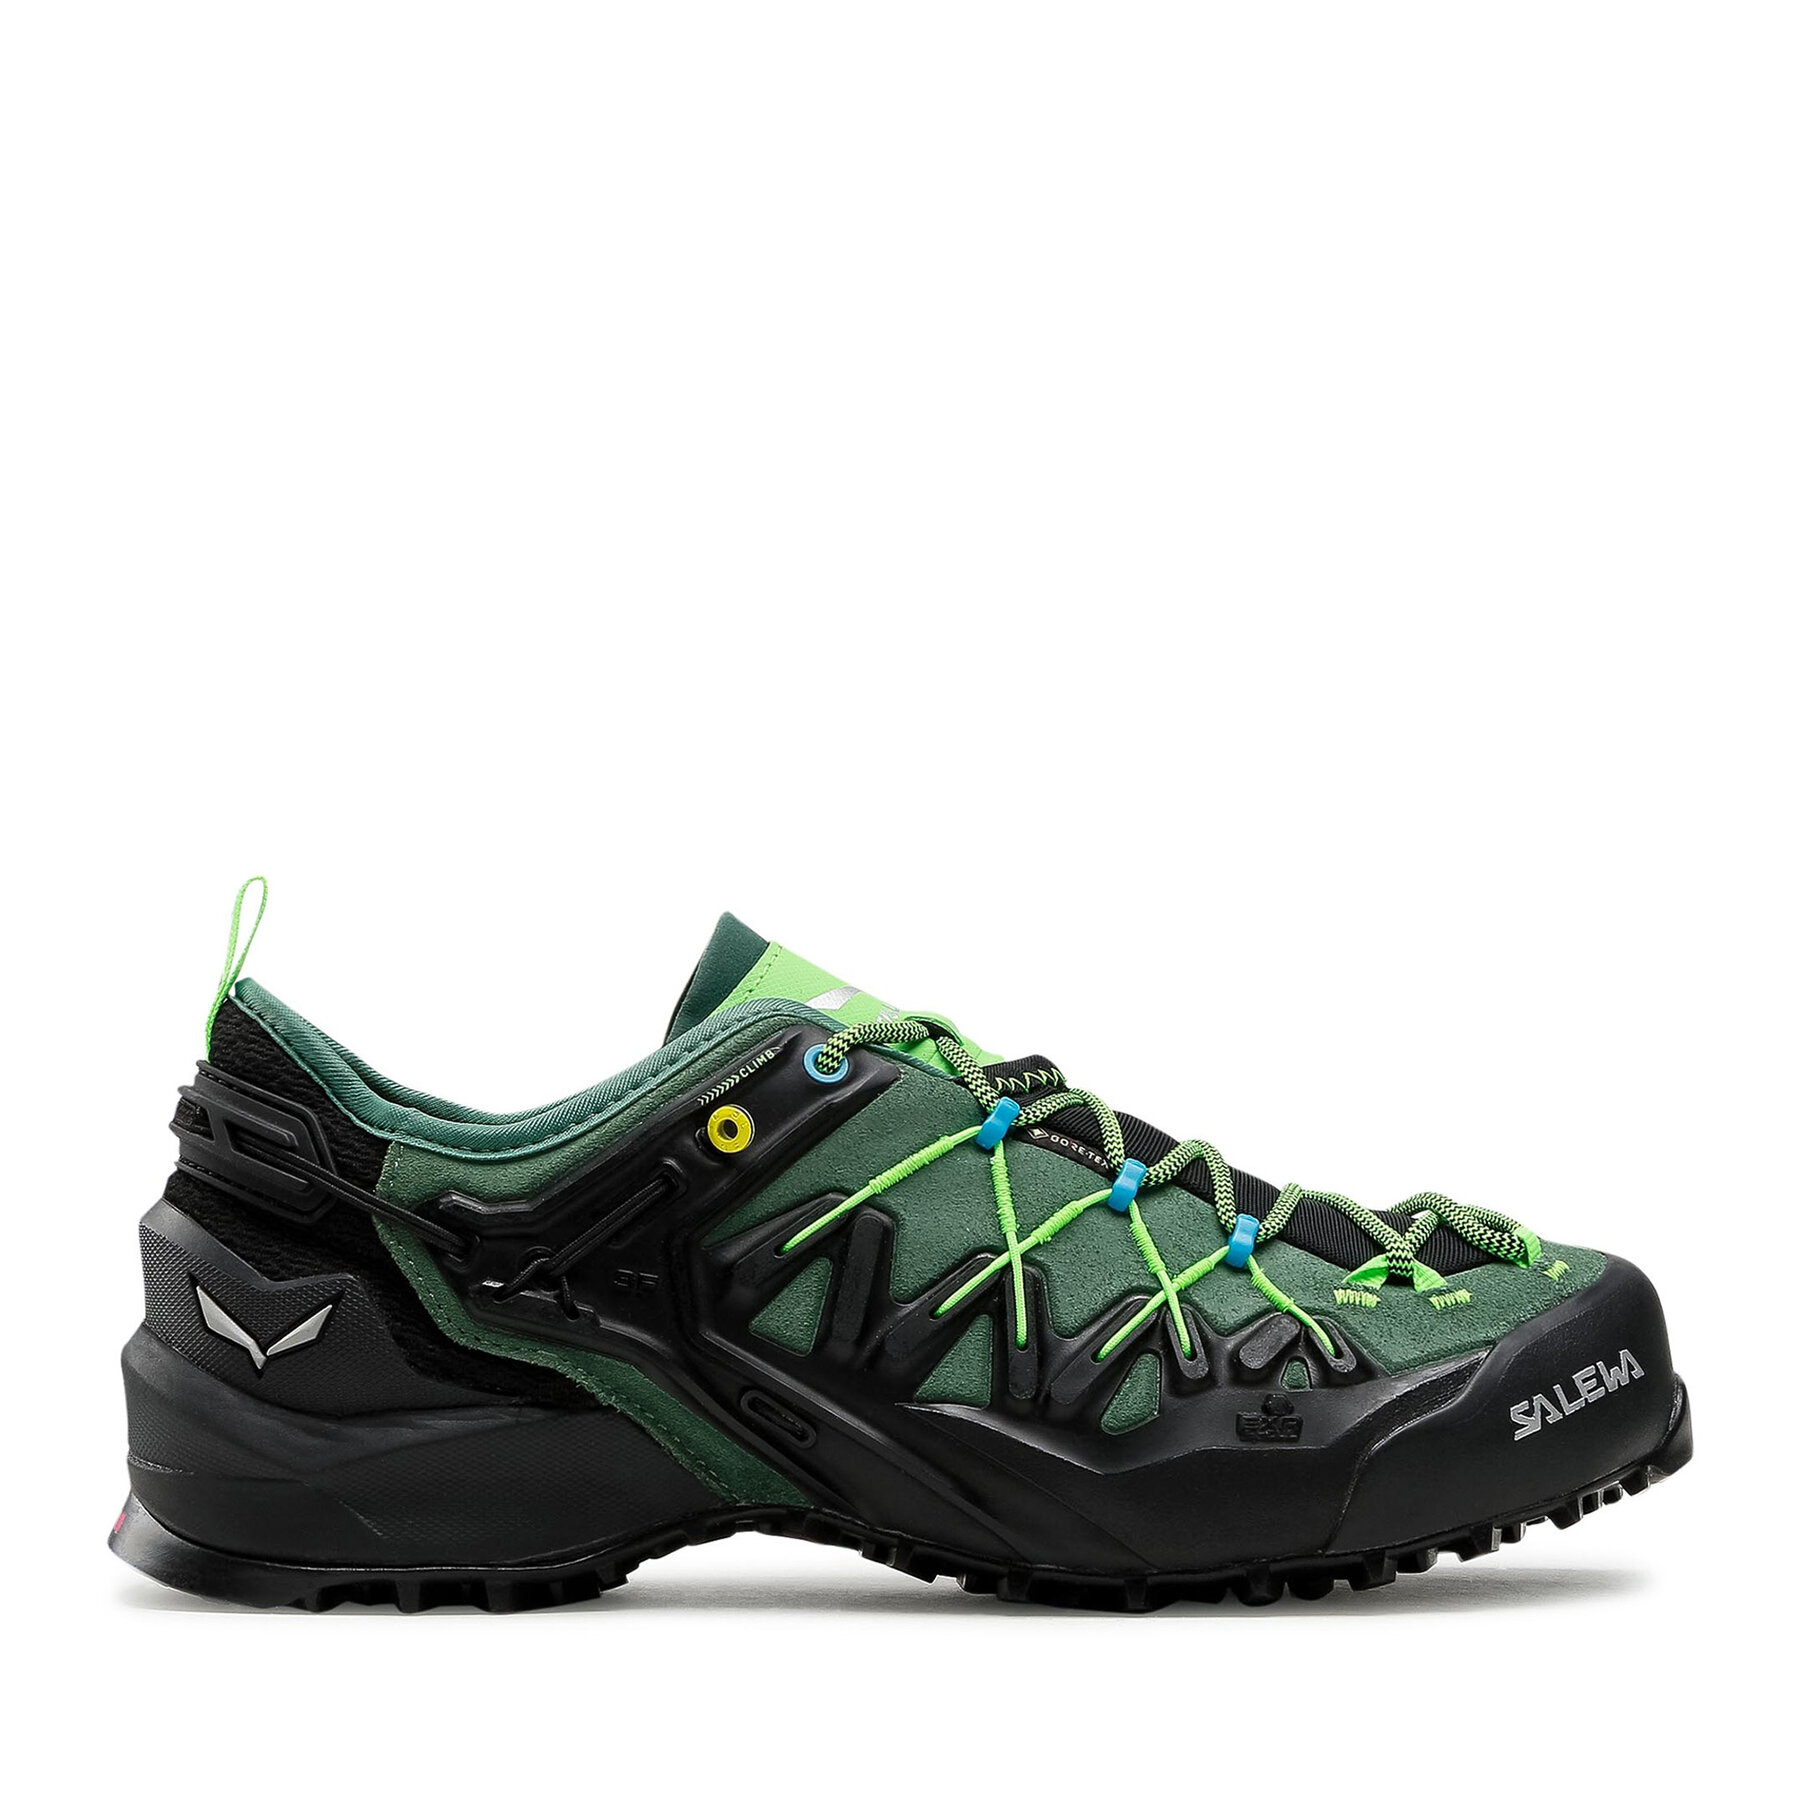 Comprar en oferta Salewa Wildfire Edge GTX Men's Shoes myrtle/fluo green